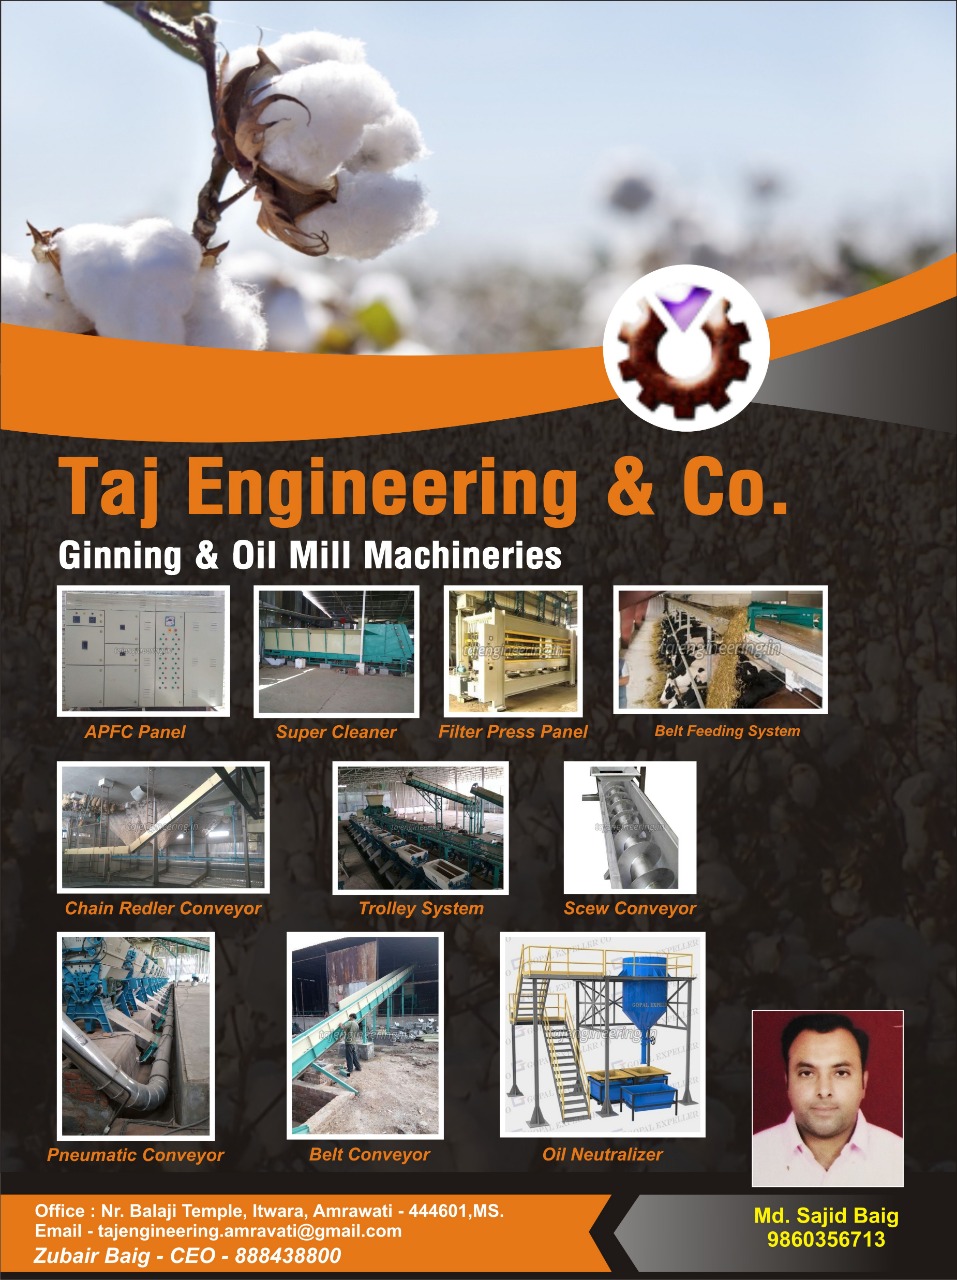 Taj Engineering & Co.